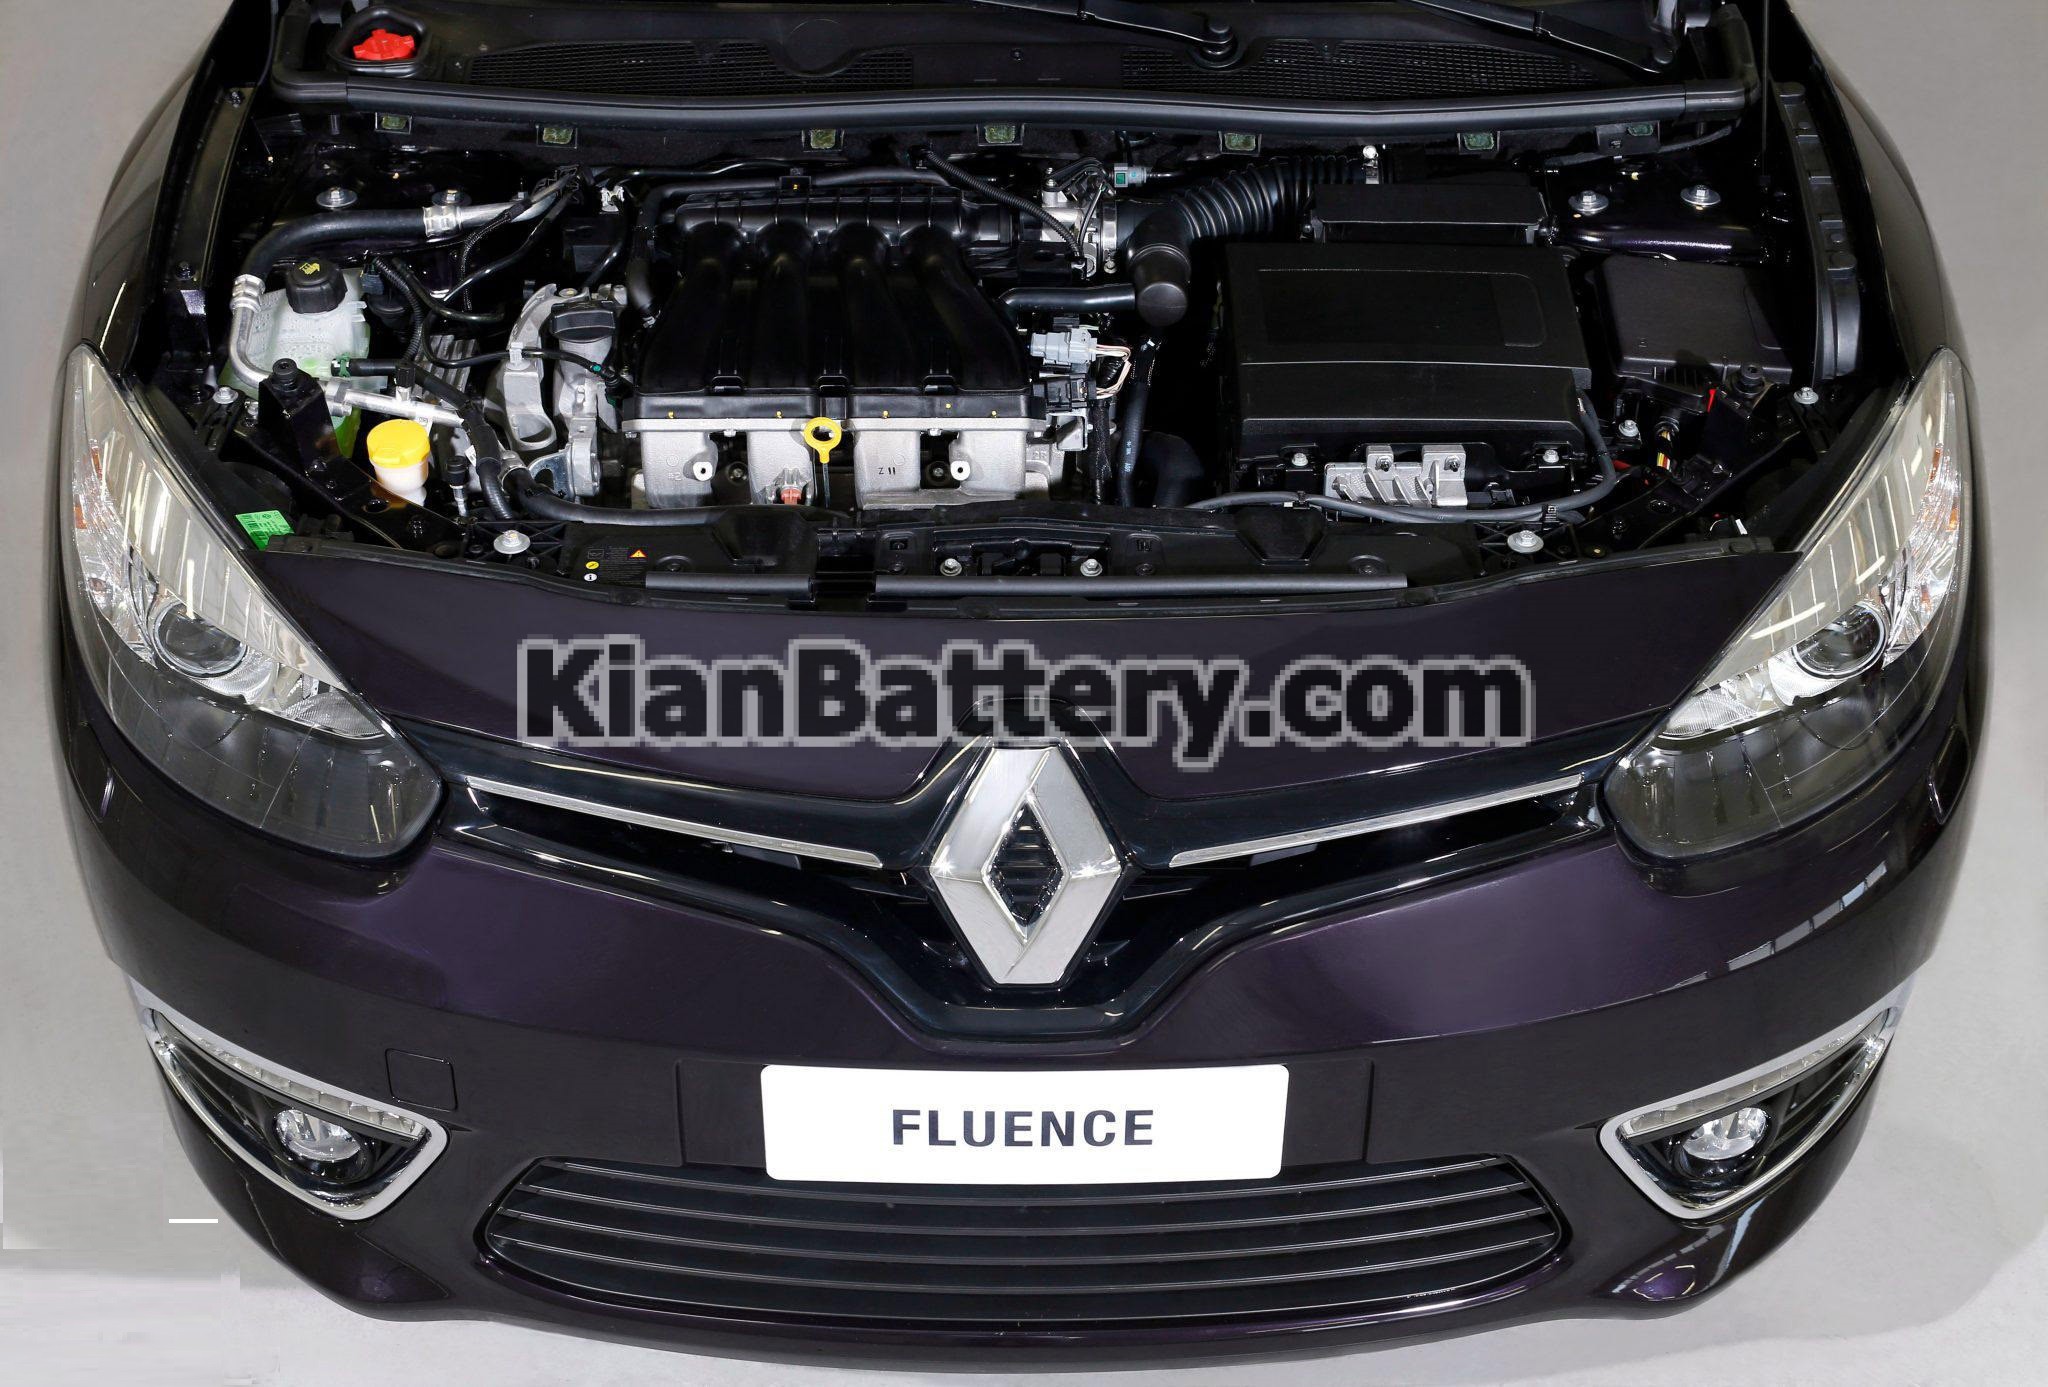 Renault Fluence 4 scaled 1 نقد و بررسی رنو فلوئنس اتوماتیک و دنده ای